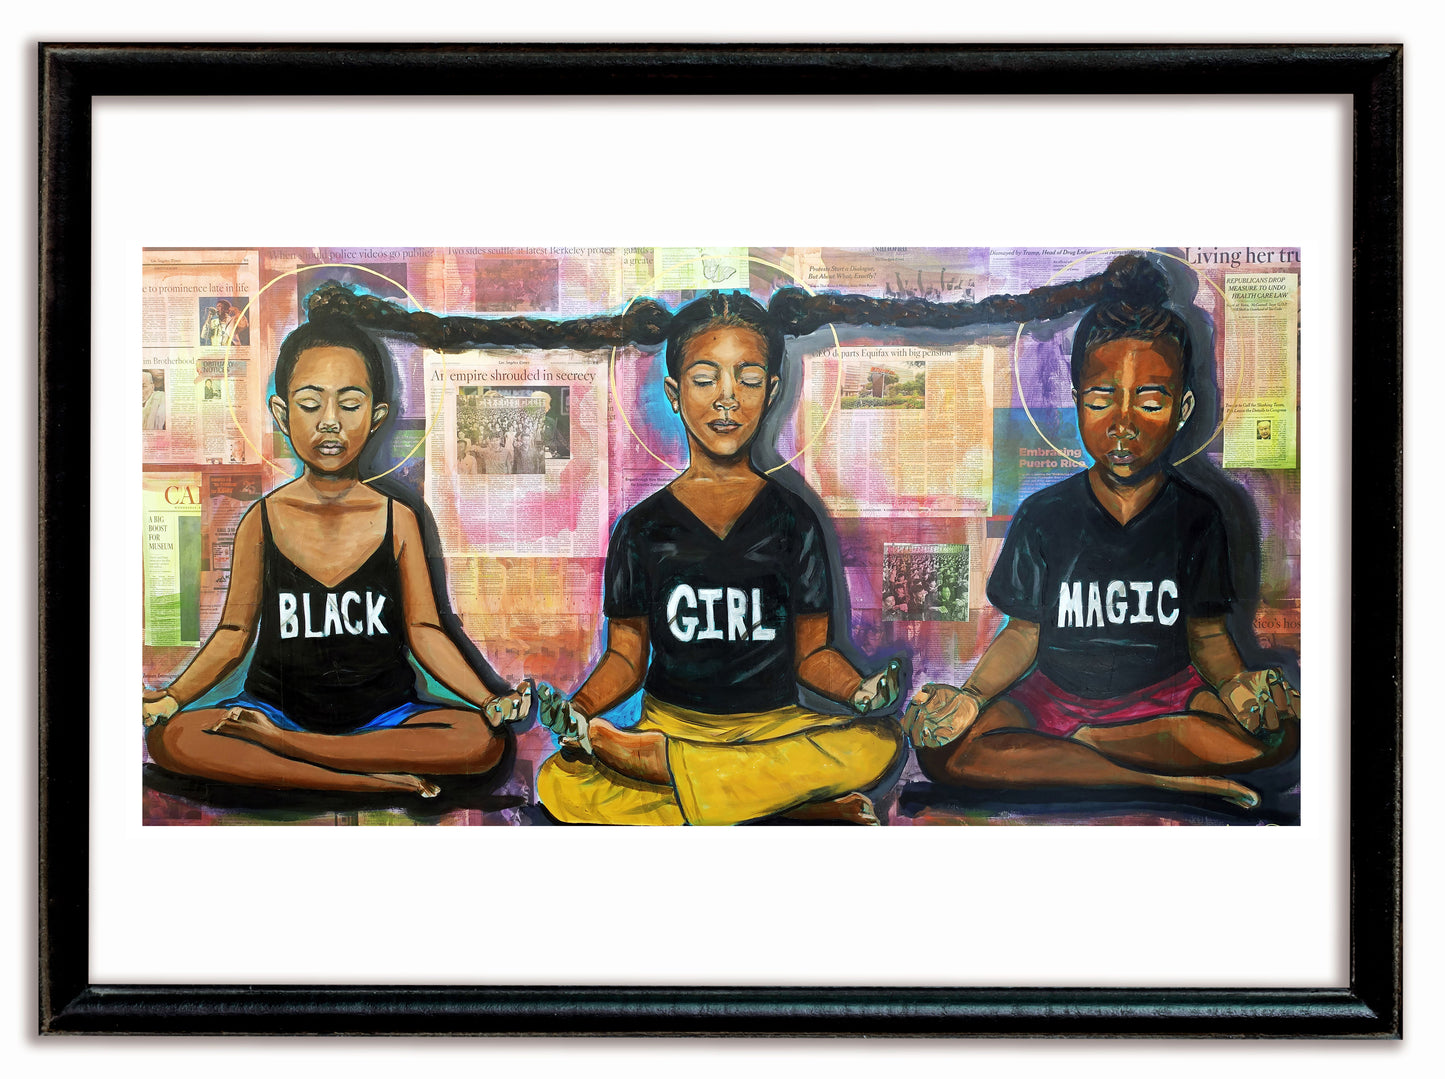 "Black Girl Magic" Prints